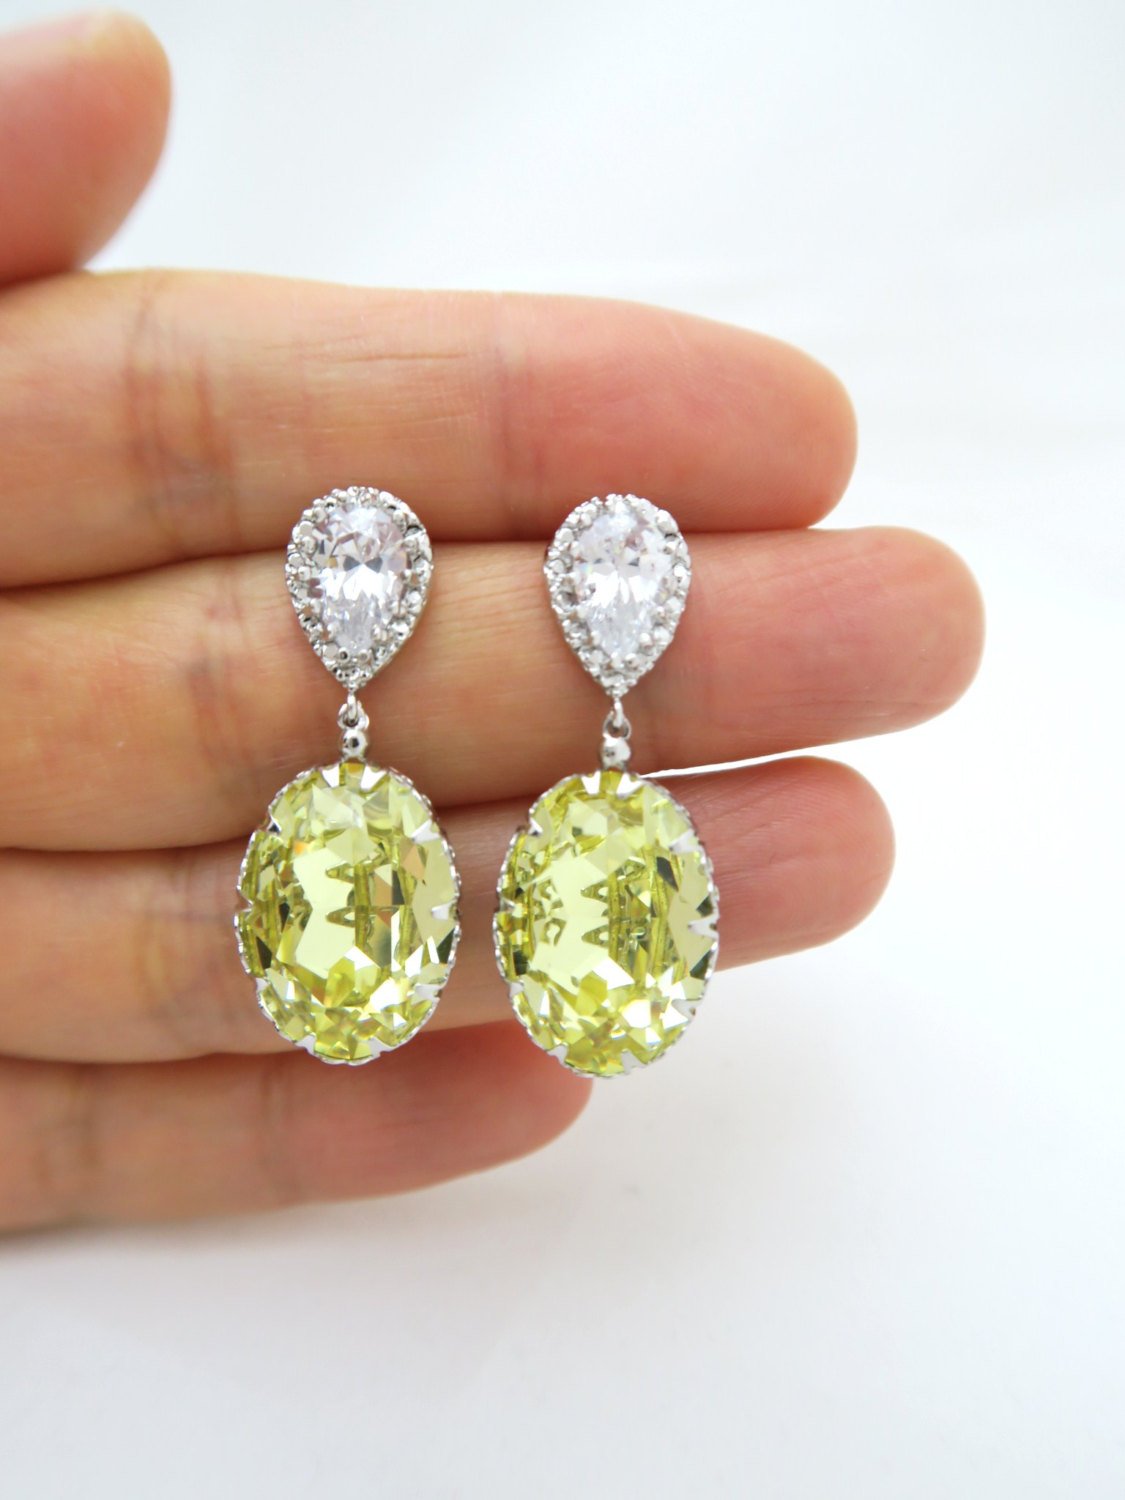 Light Yellow Earrings Swarovski Oval Jonquil Crystal Earrings Wedding Jewelry Bridesmaid Gift Bridal Earrings Bridesmaid Earrings (e184)